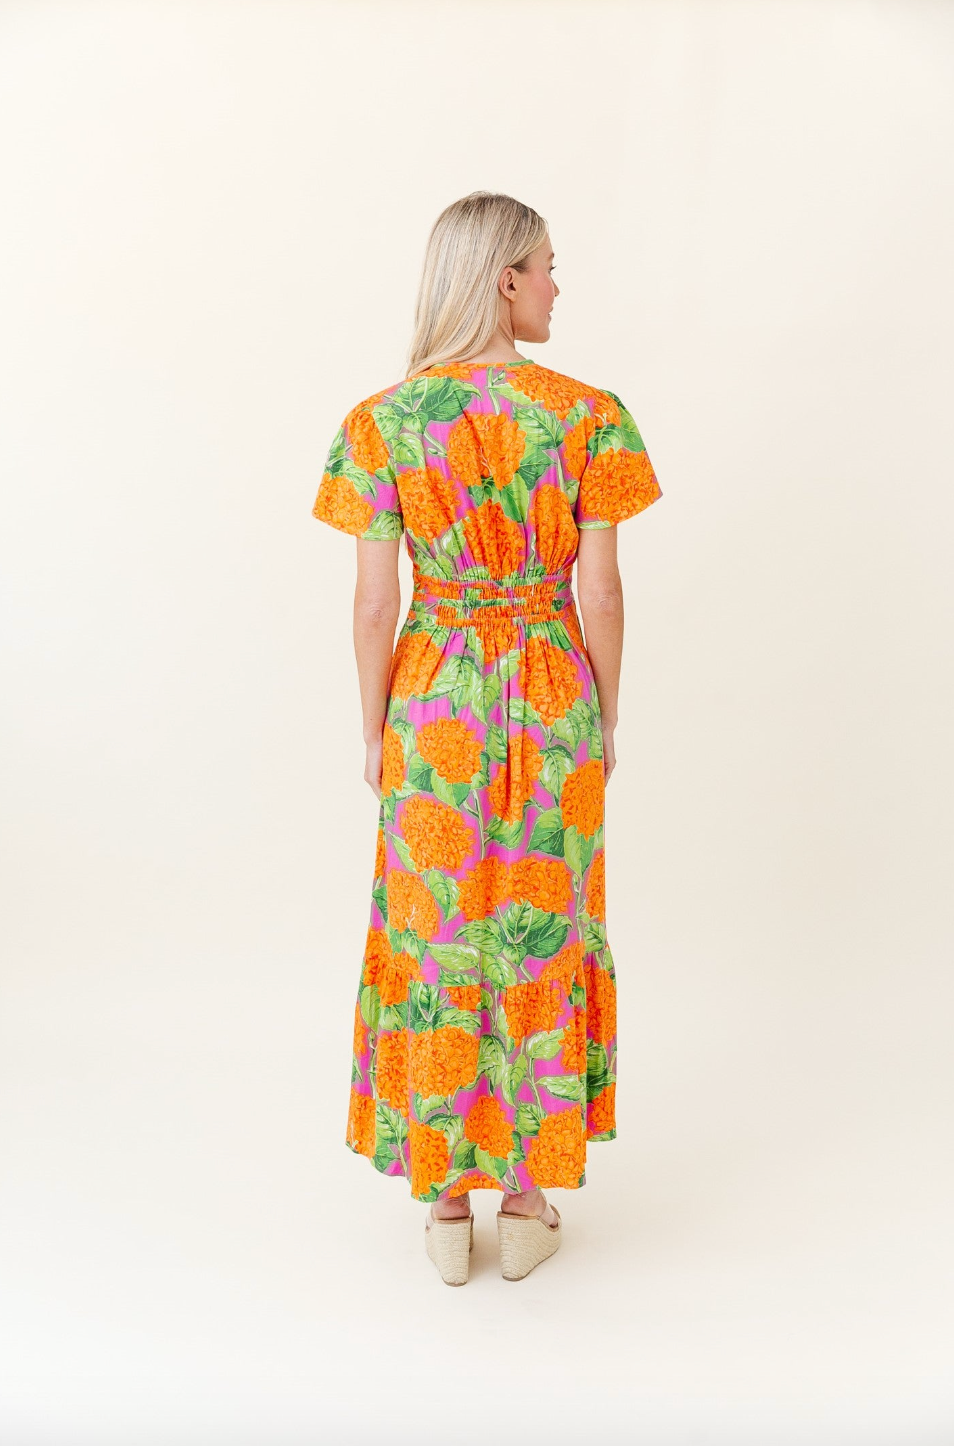 Sheridan French | Eloise Dress Tangle